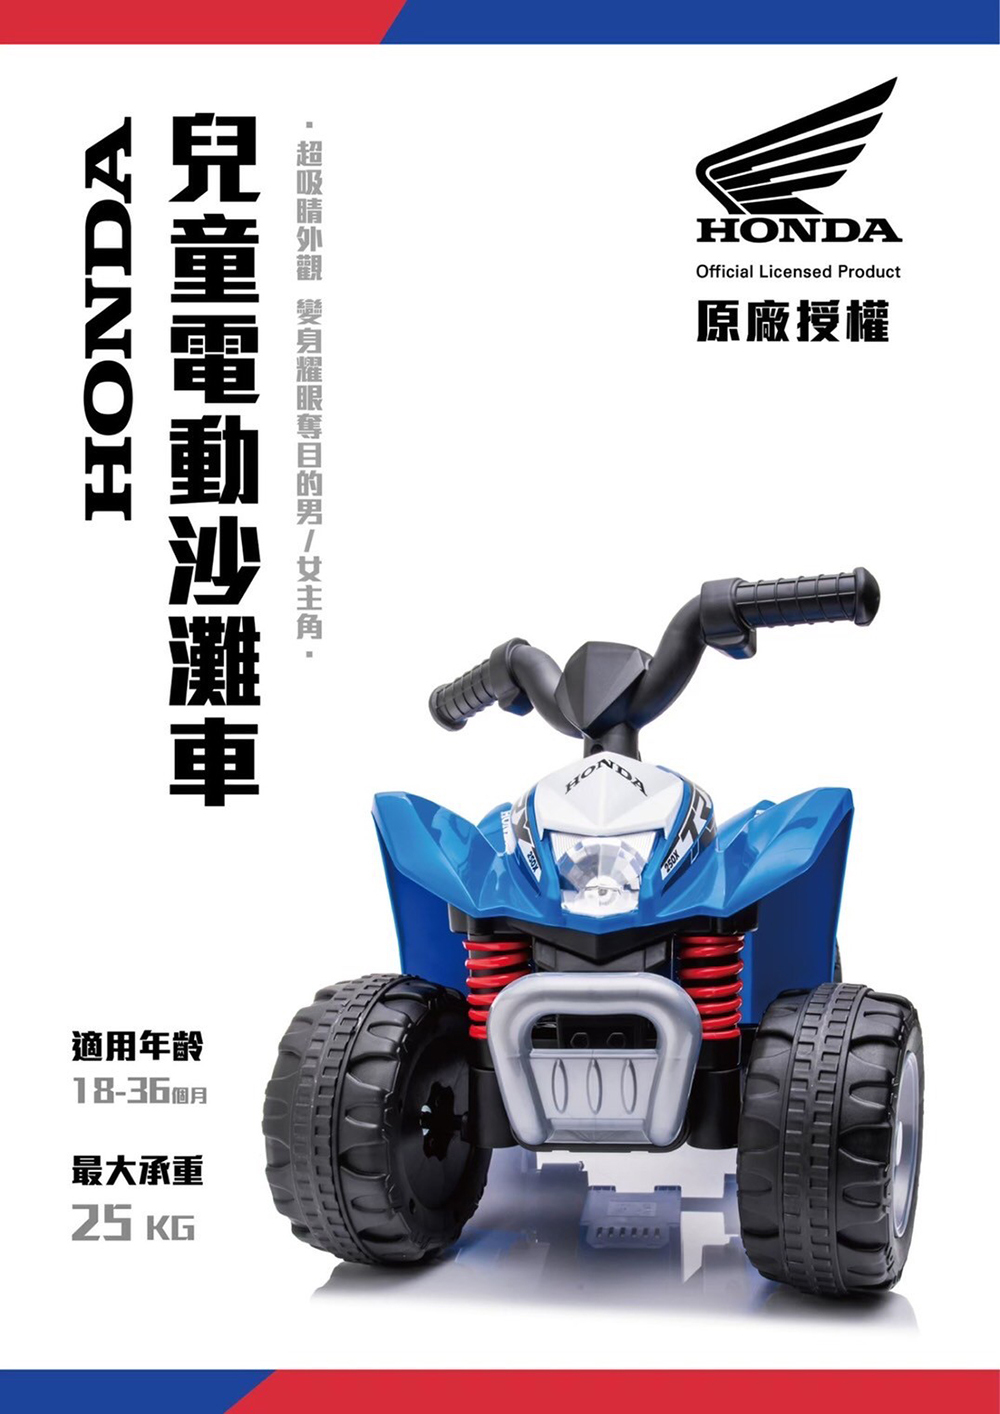 【HONDA】オリジナル認定子供用電動ATV 2色展開